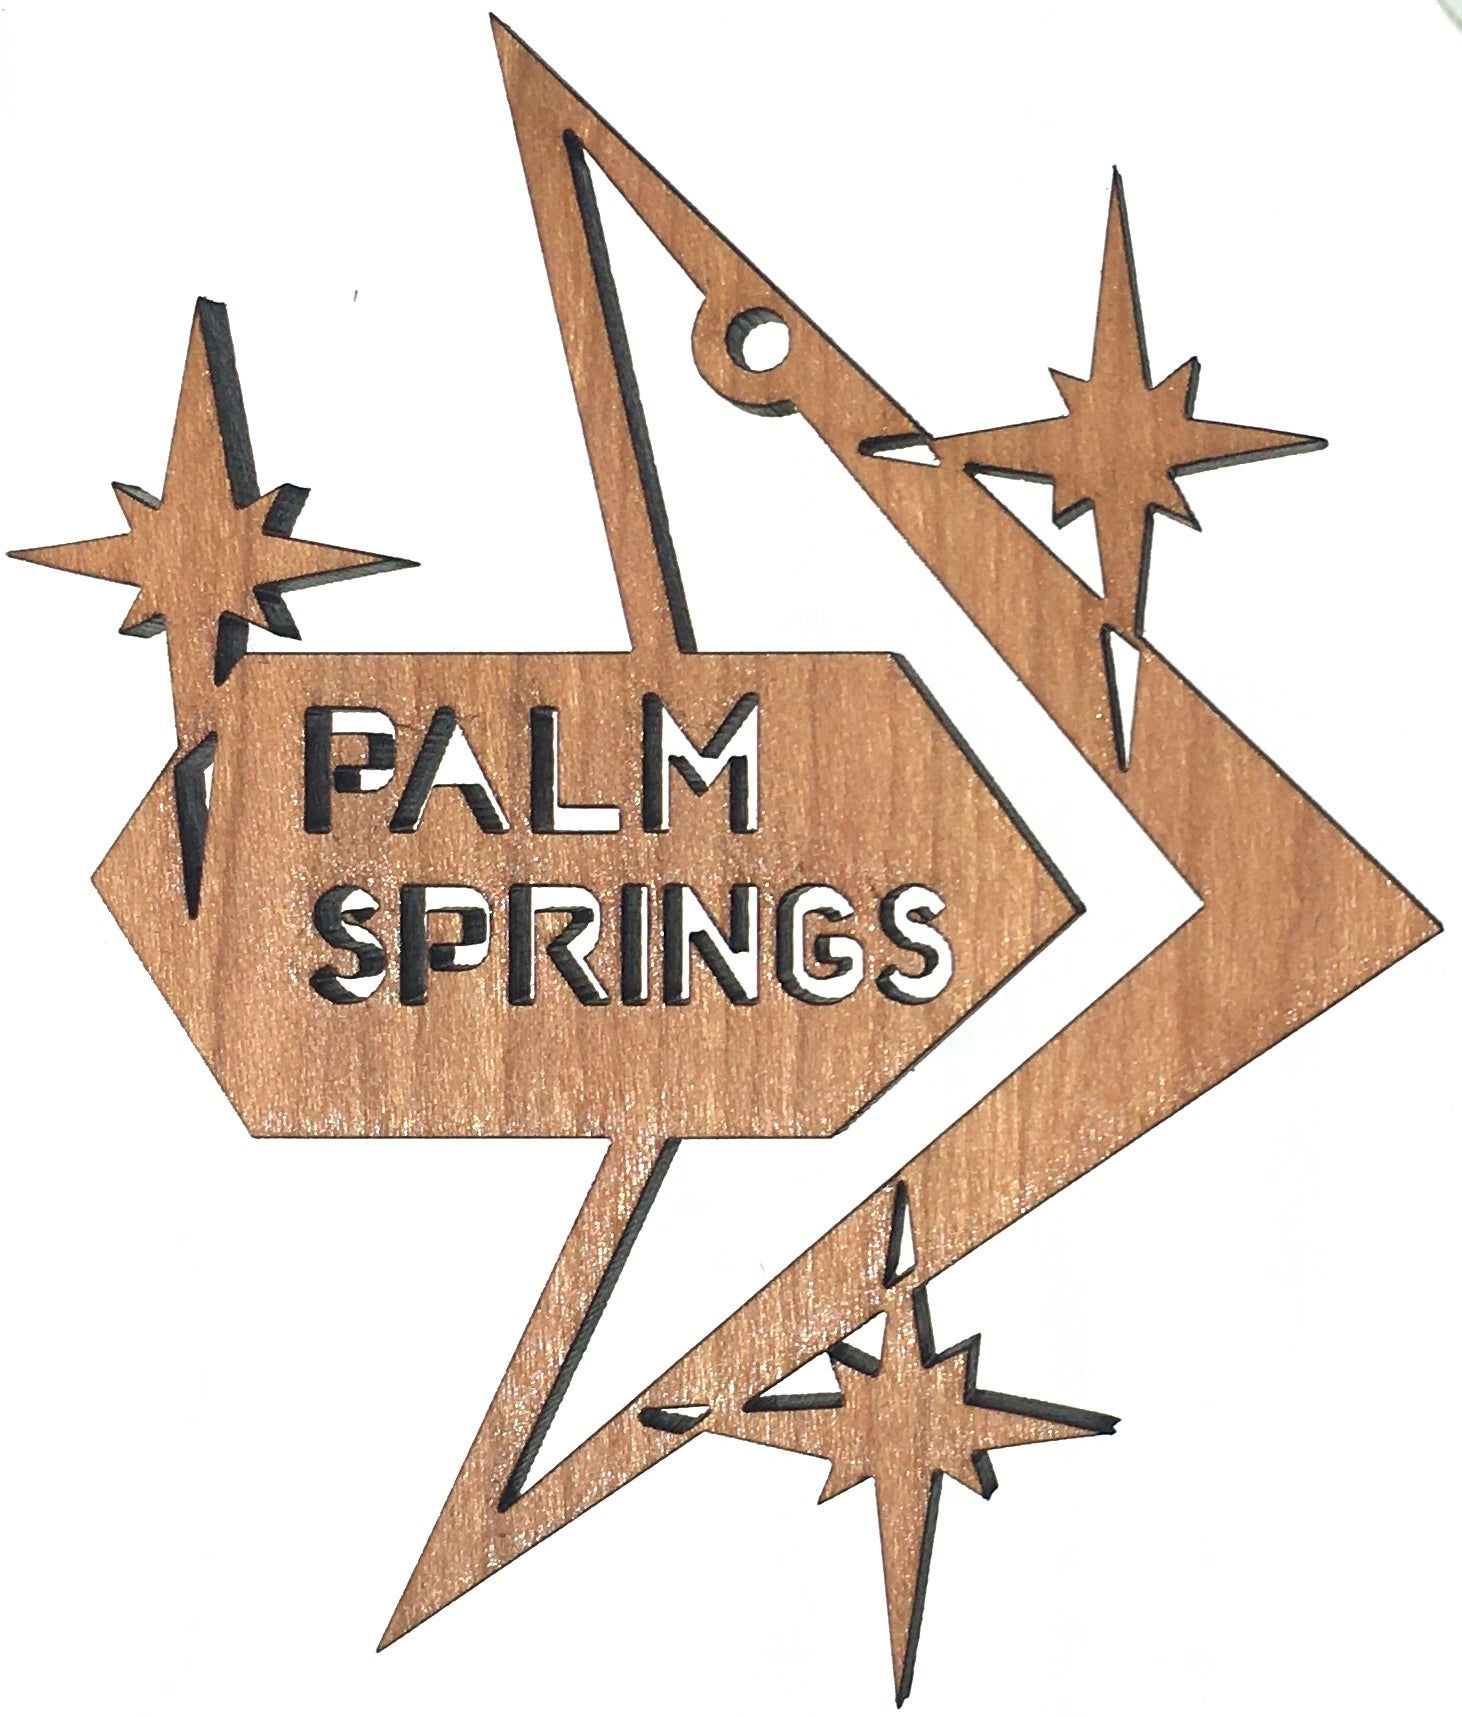 Midcentury Modern Wooden Ornament - Palm Springs Arrowhead - Destination PSP